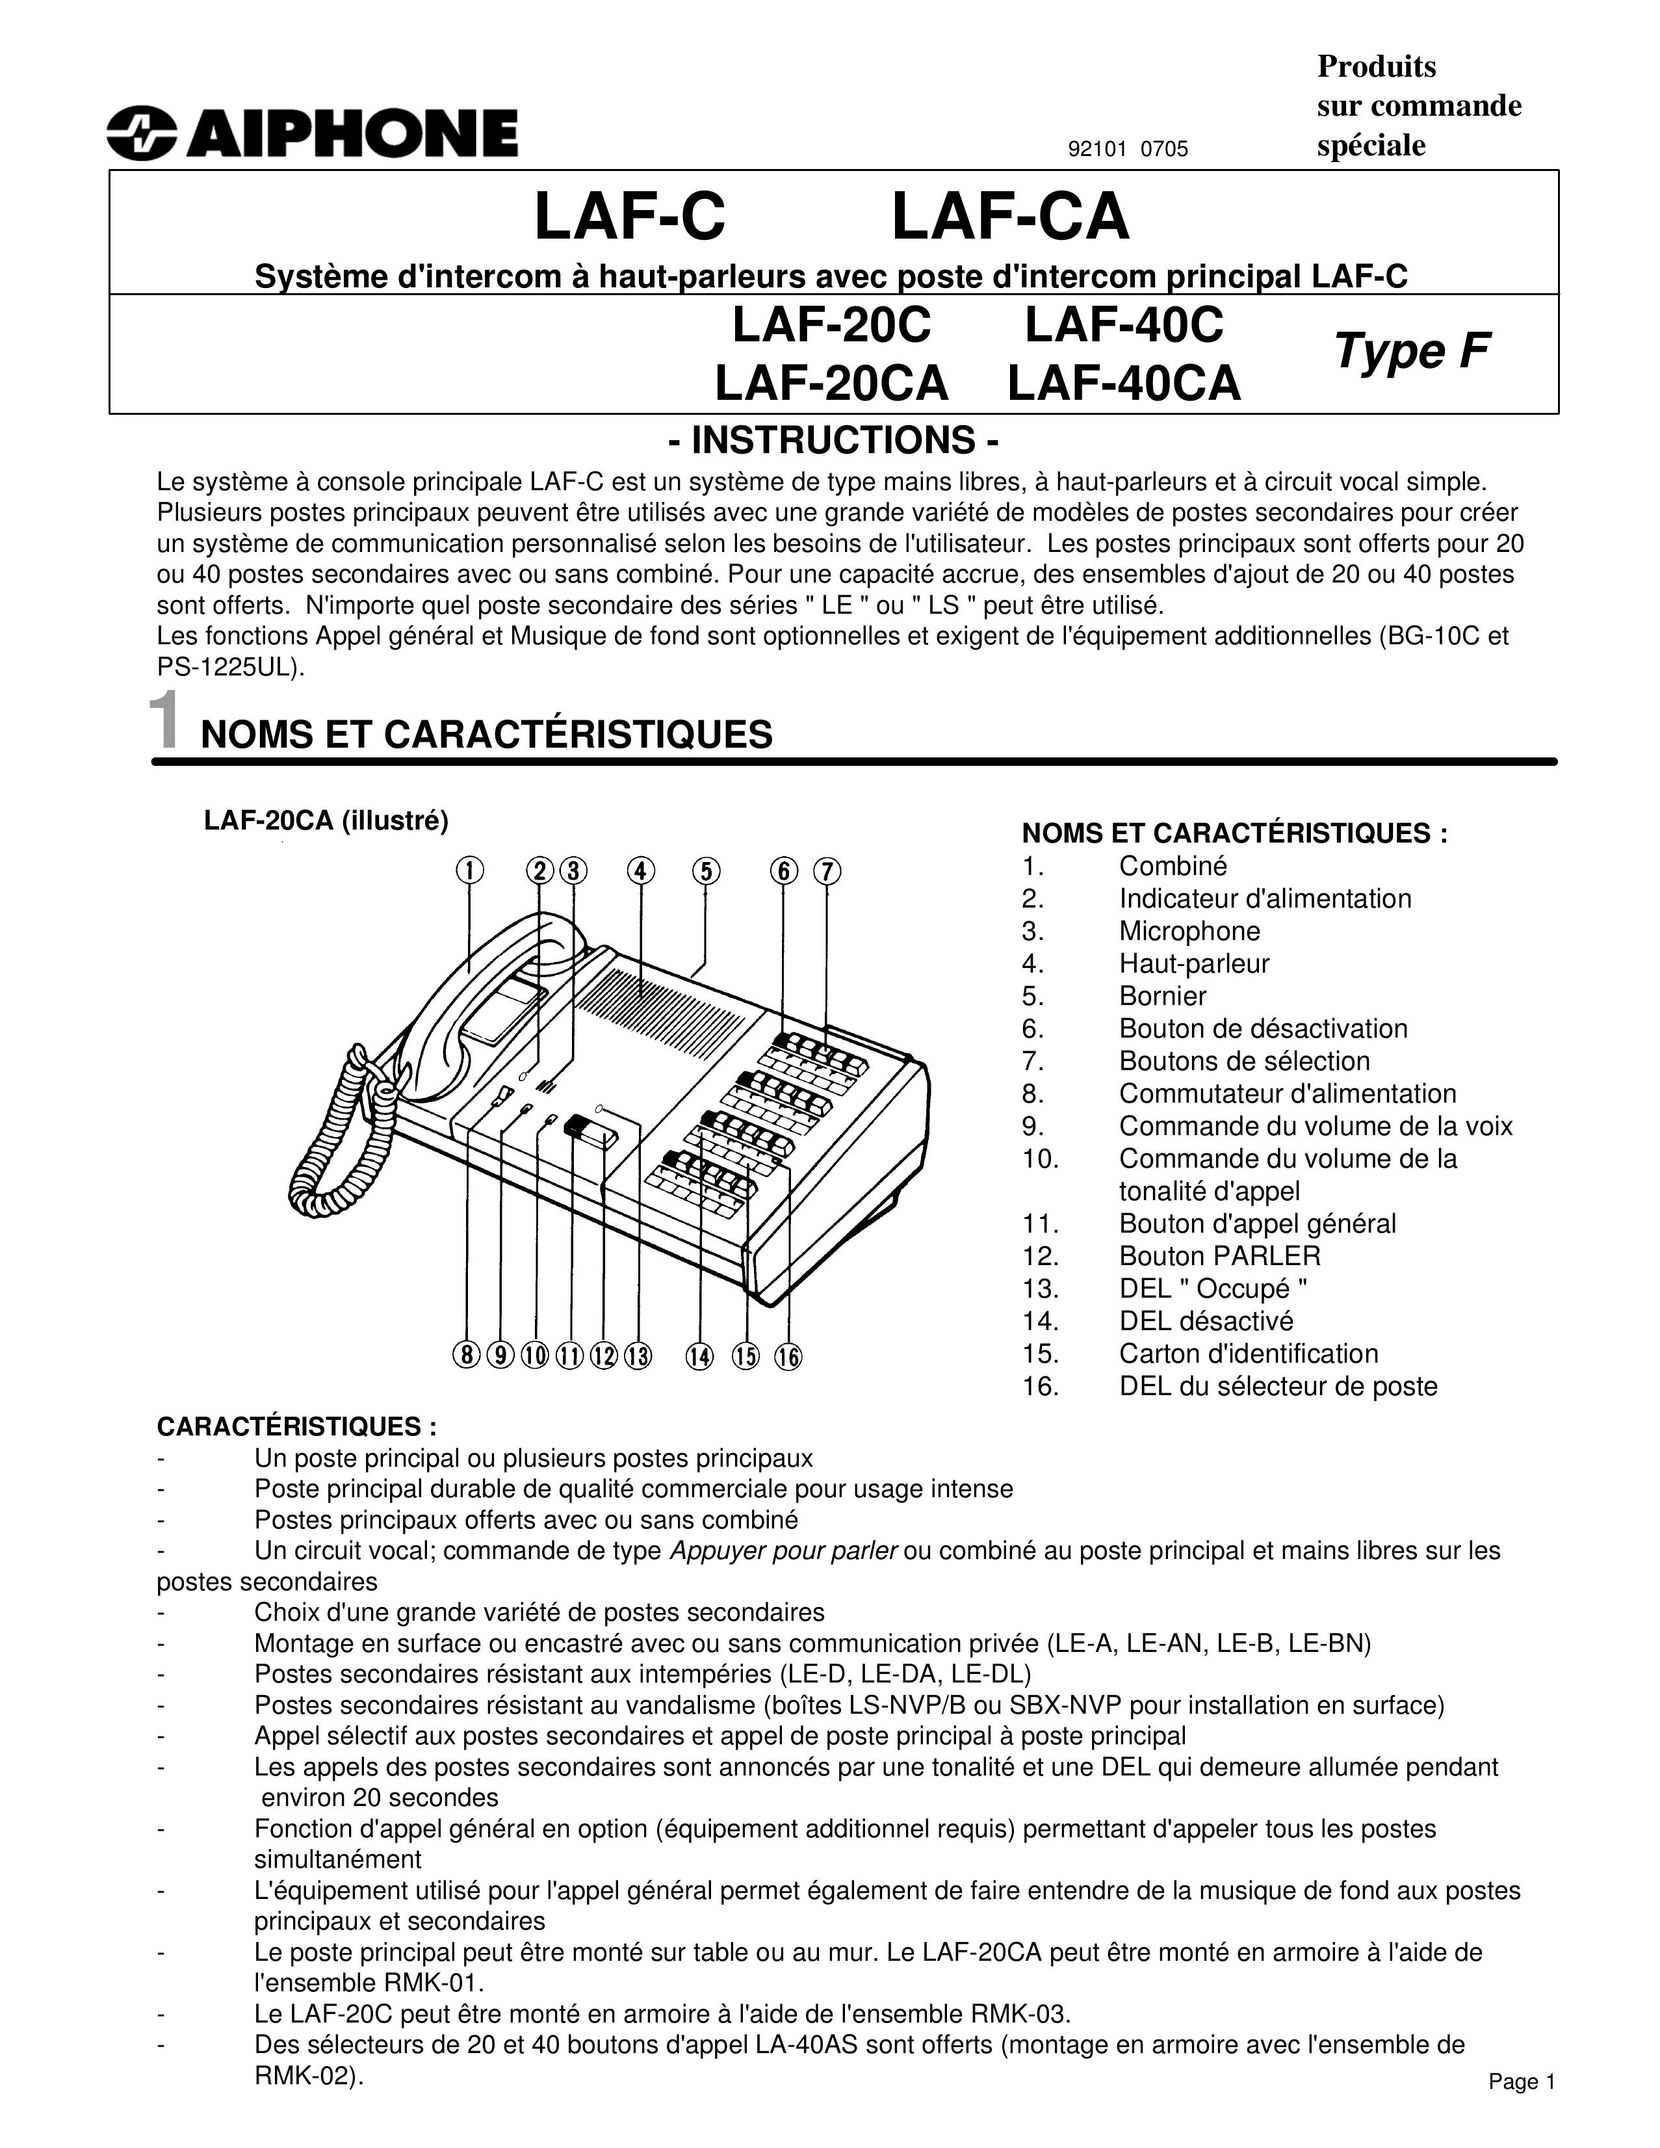 Aiphone LAF-C Telephone User Manual